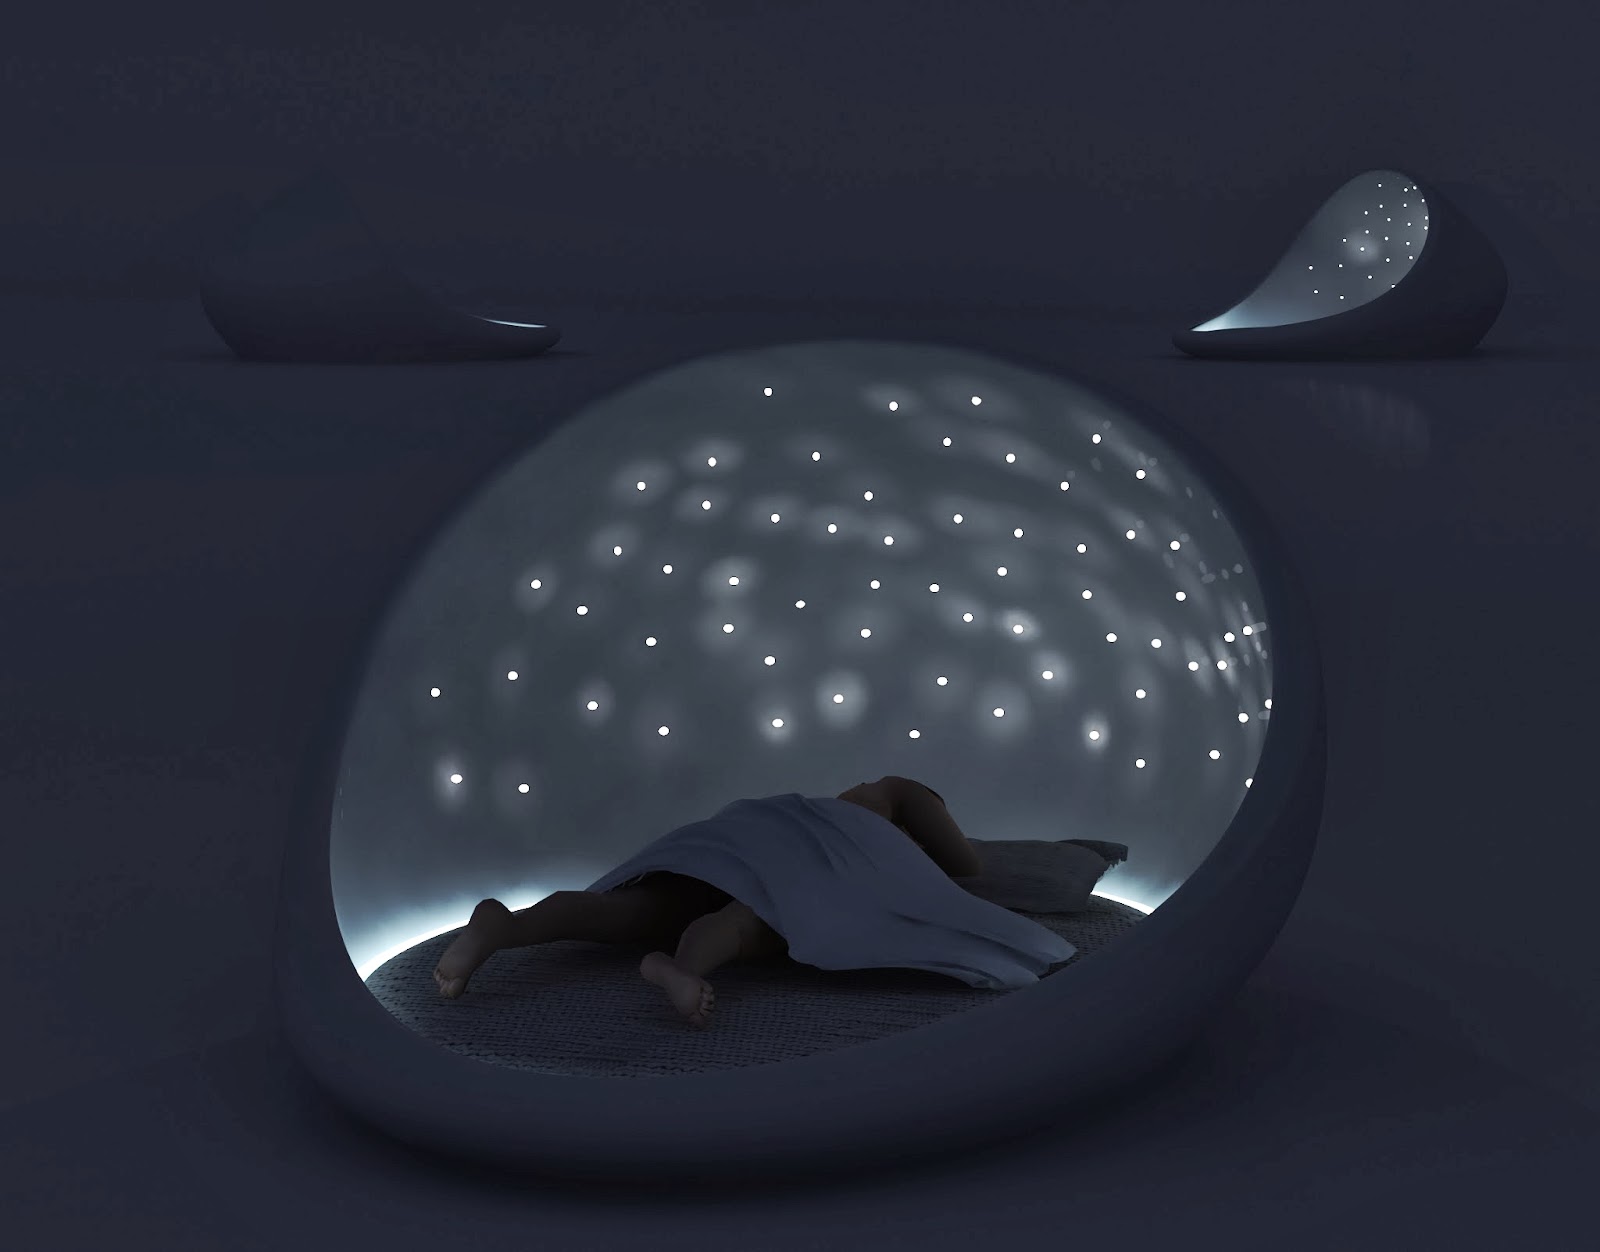 The Cosmos Bed by Natalia Rumyantseva